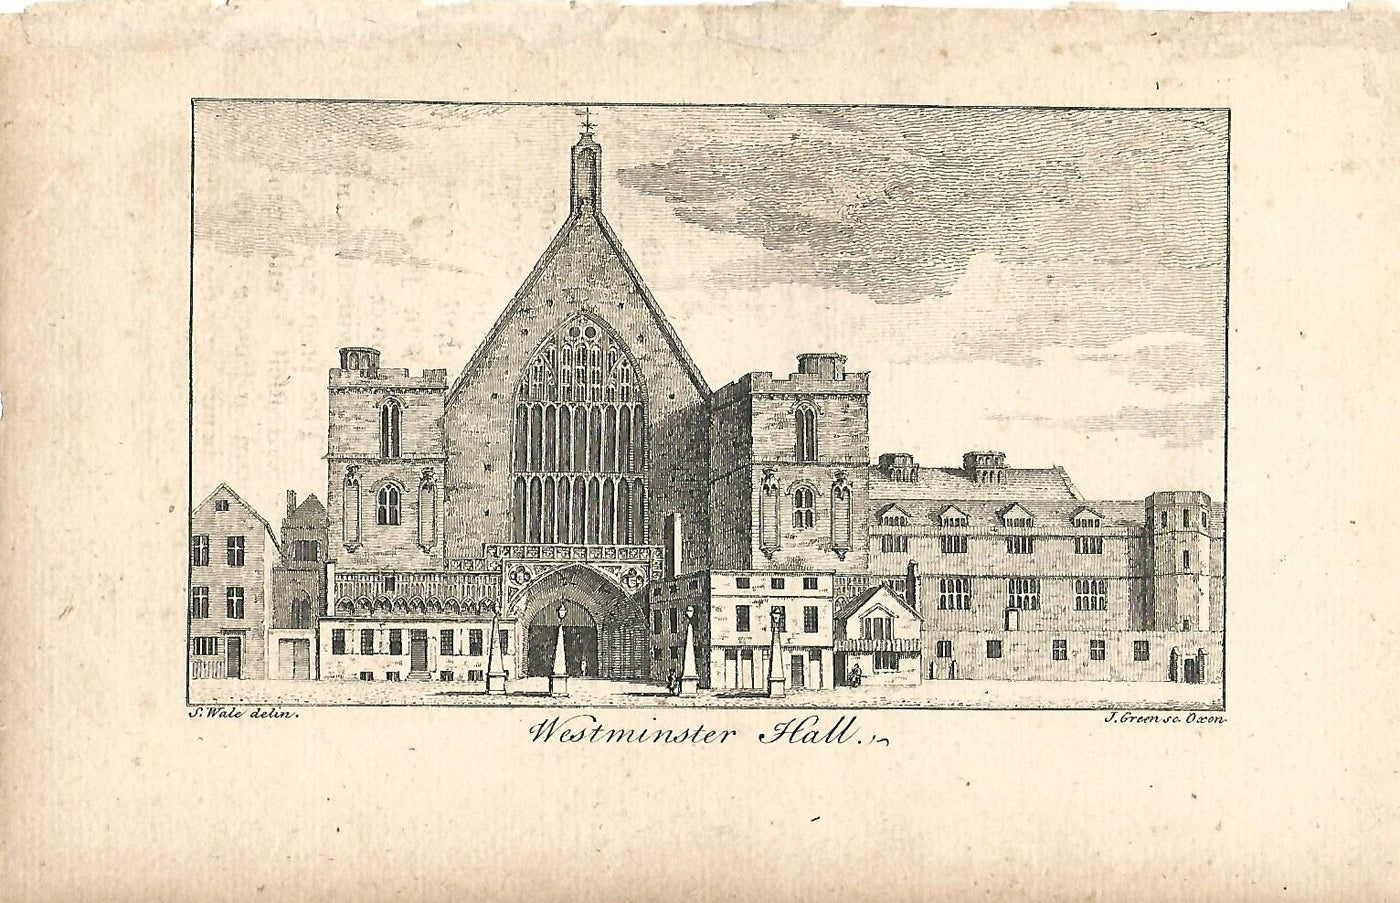 Westminster Hall antique print published 1776